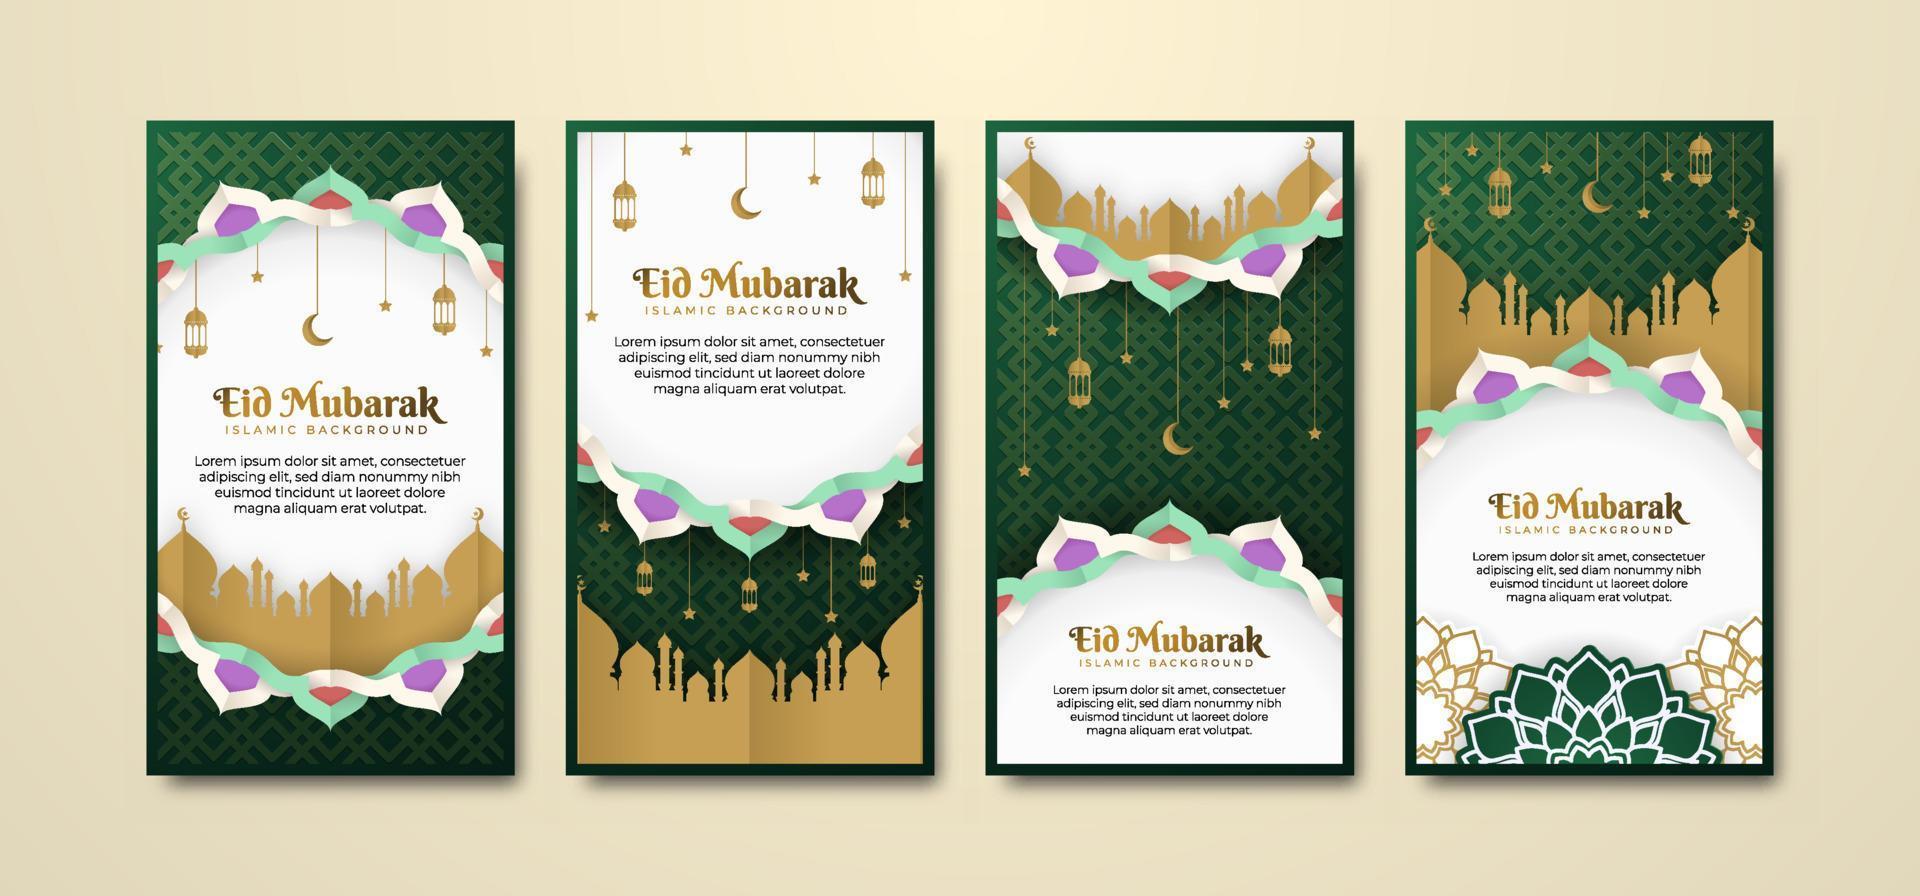 prachtige eid mubarak sociale media verhalencollectie in papierstijl met moskee en mandala-bloem. eid mubarak wenskaart achtergrond met moskee, halve maan, lantaarn en arabesk ornament. vector